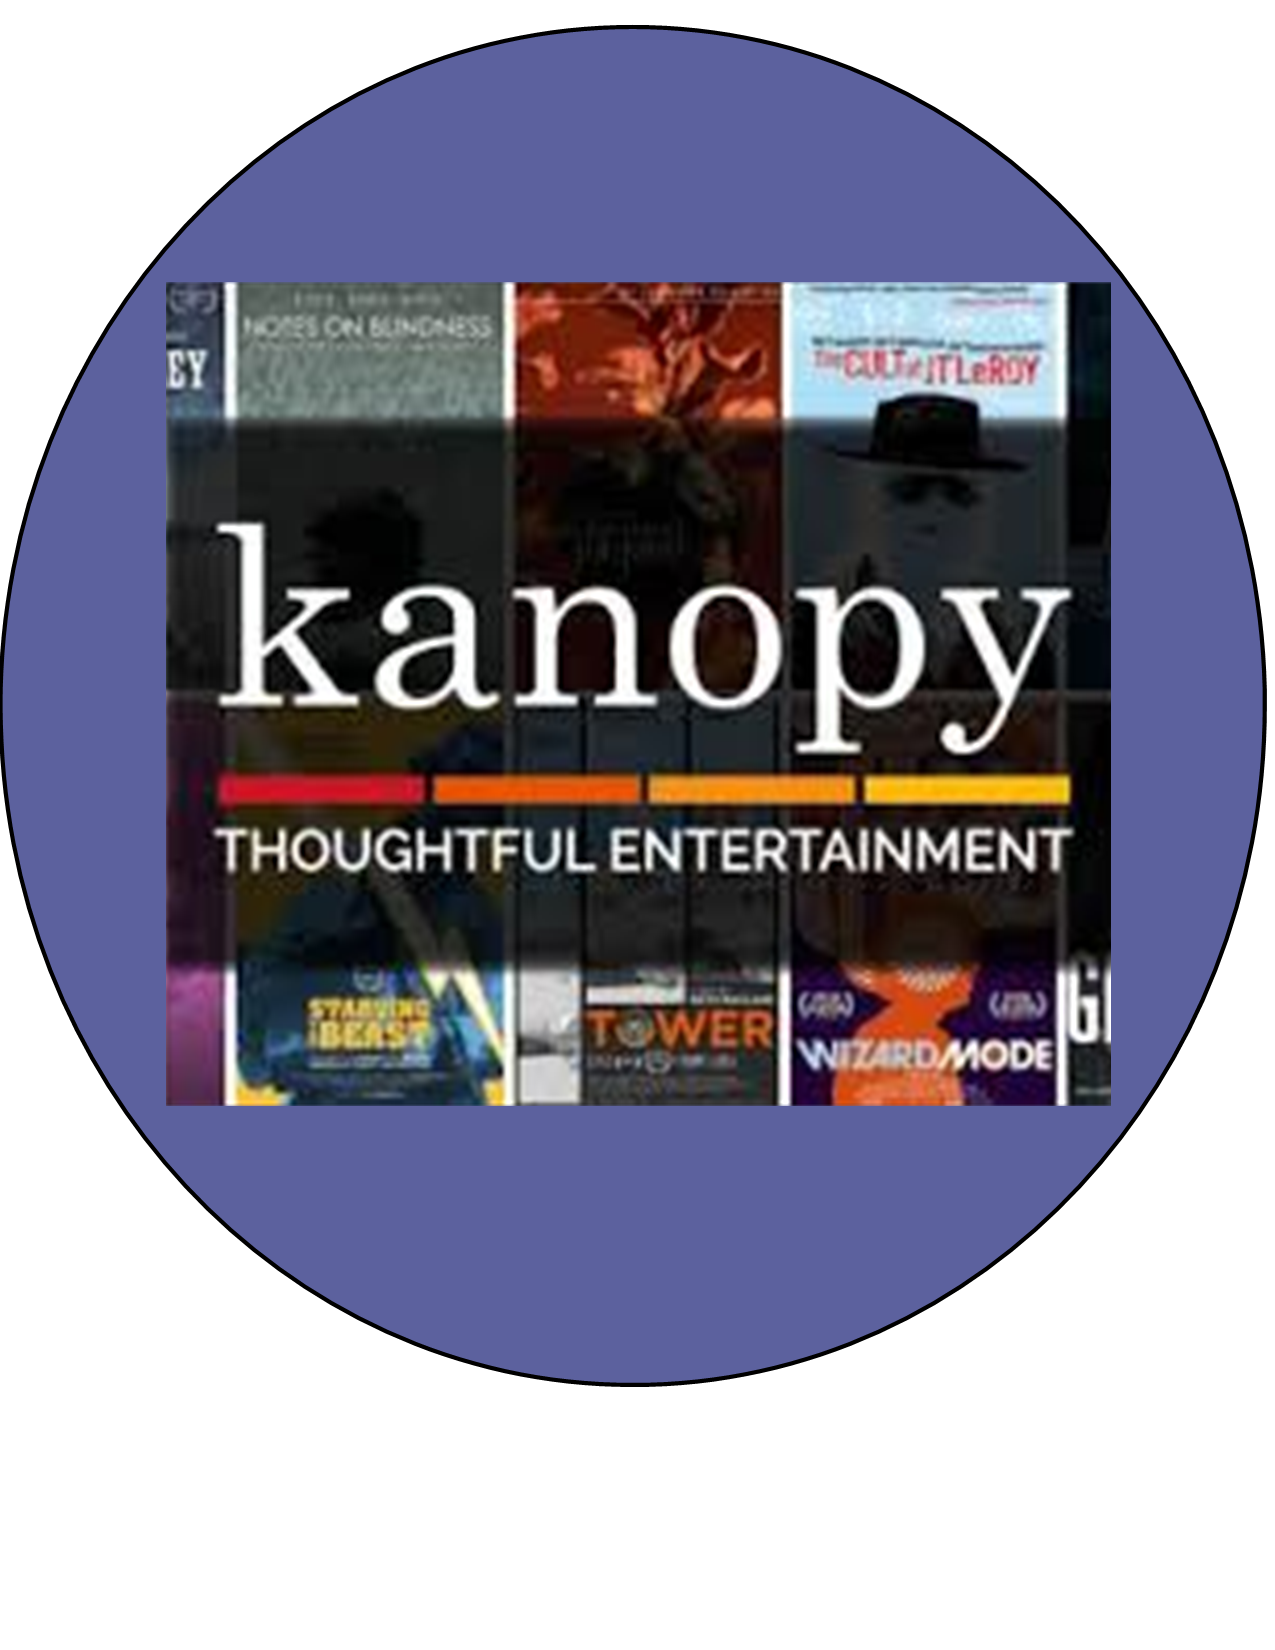 Kanopy movie streaming service